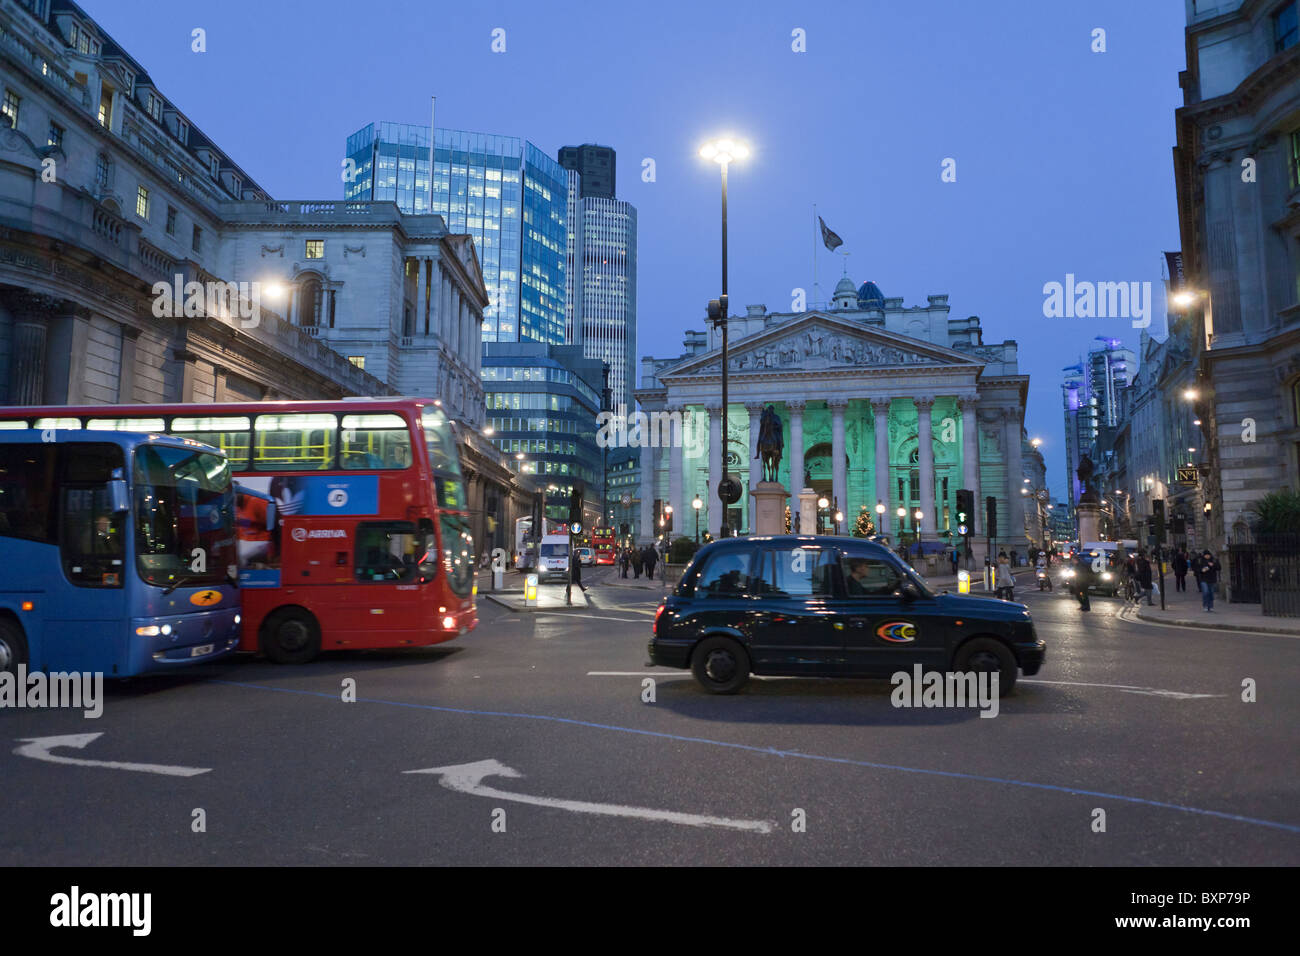 The Royal Exchange,London Stock Photo - Alamy